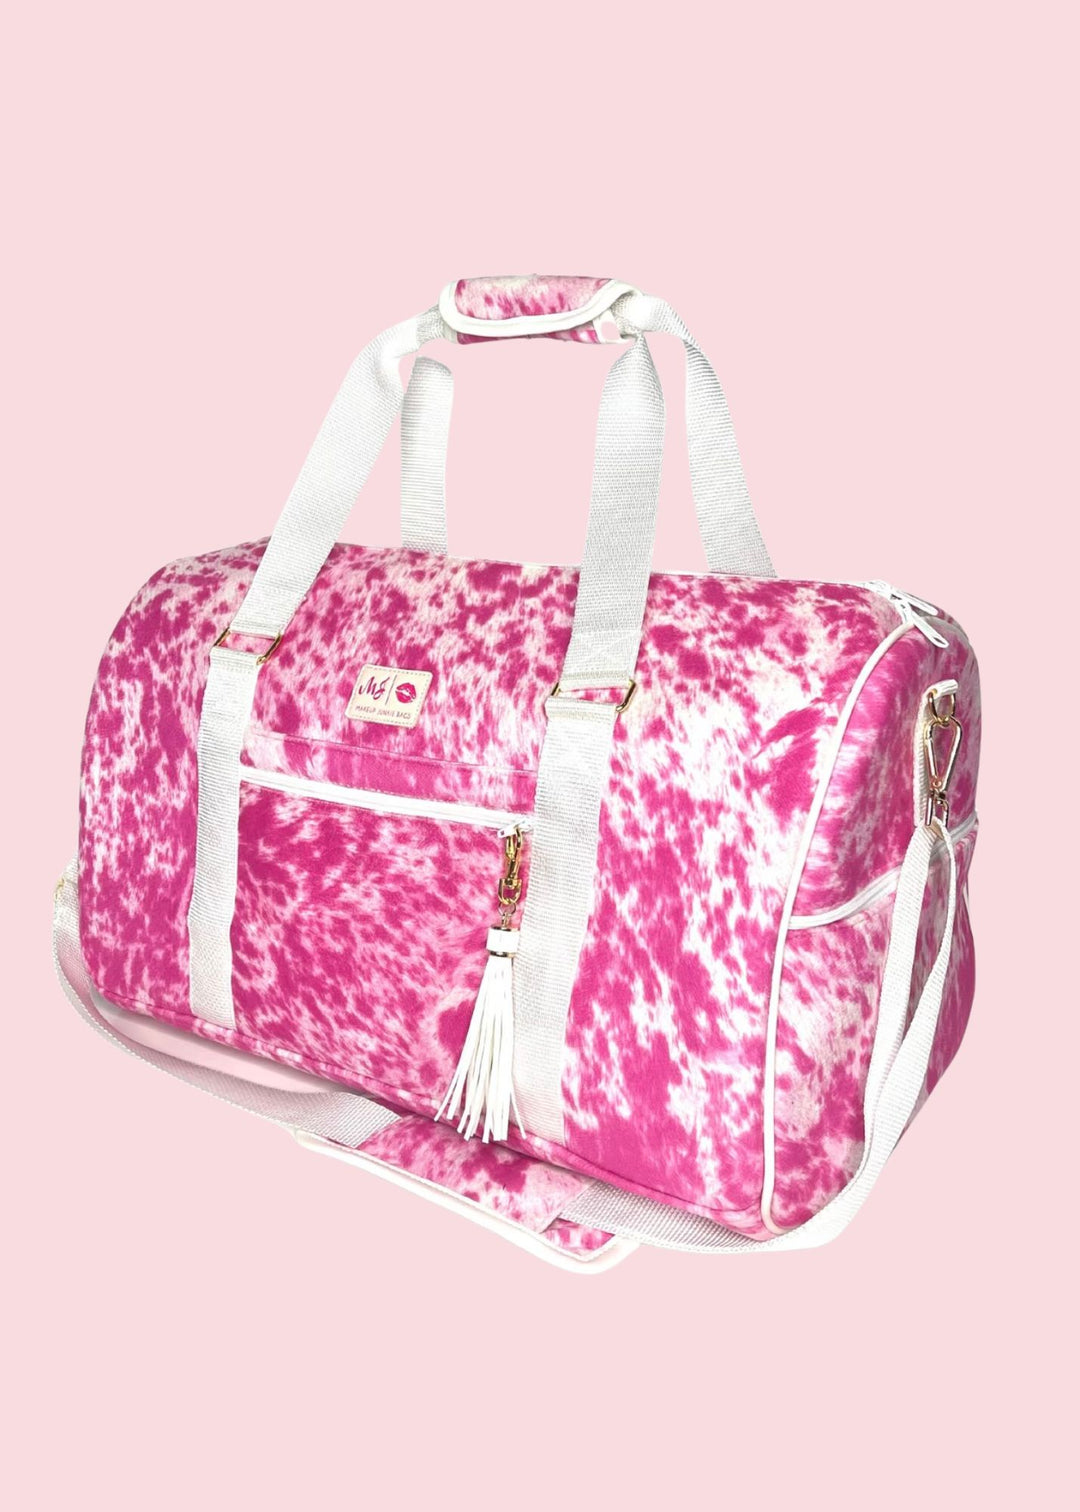 Makeup Junkie Bags - Lola Hot Pink Duffel [Pre-Order]